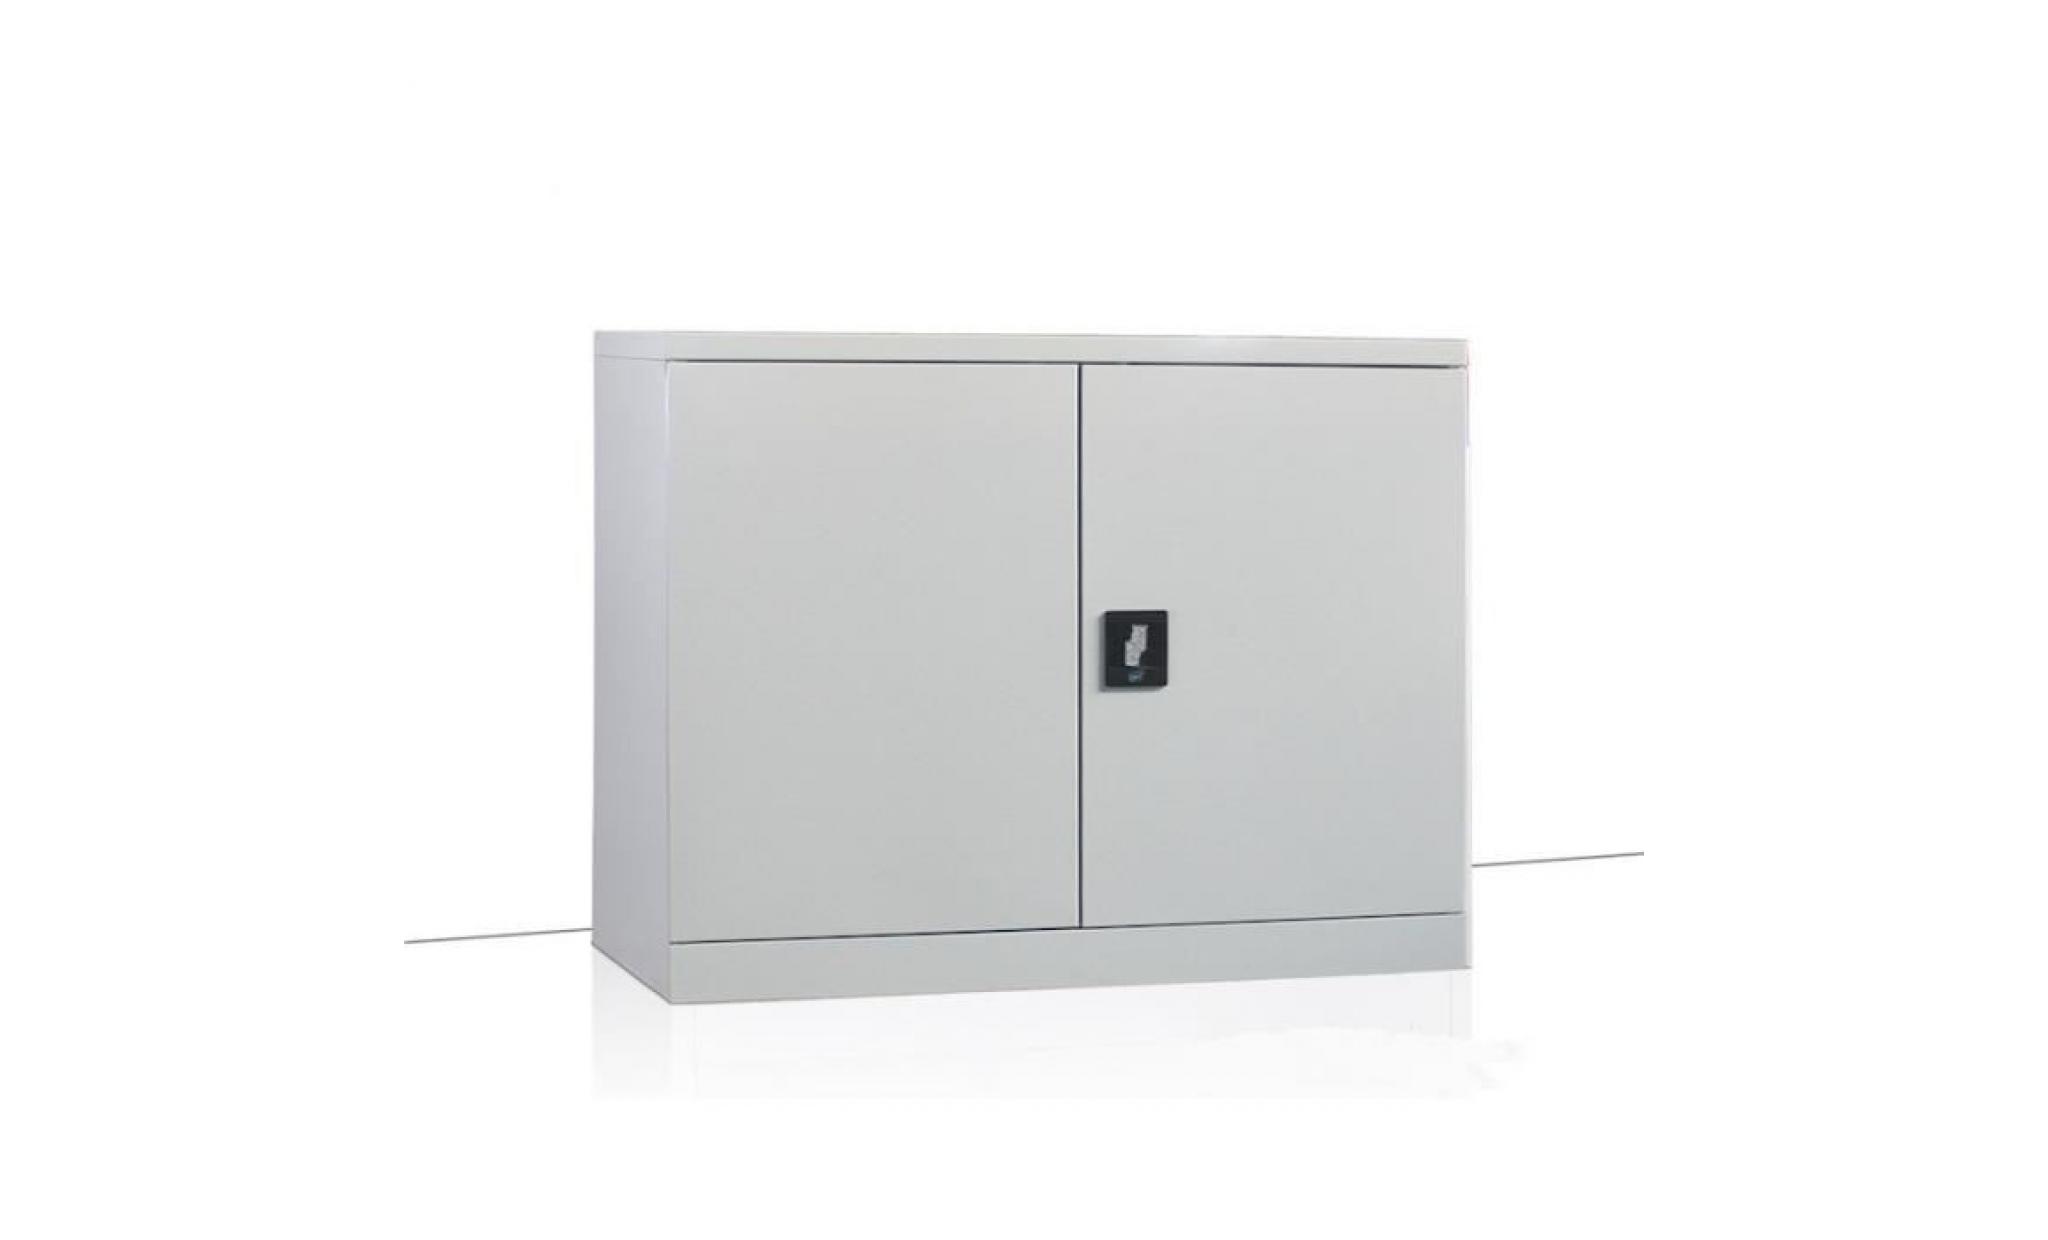 mmt steel metal office storage 2 door bookcase filing cabinet, desk height extension   73cm tall, grey